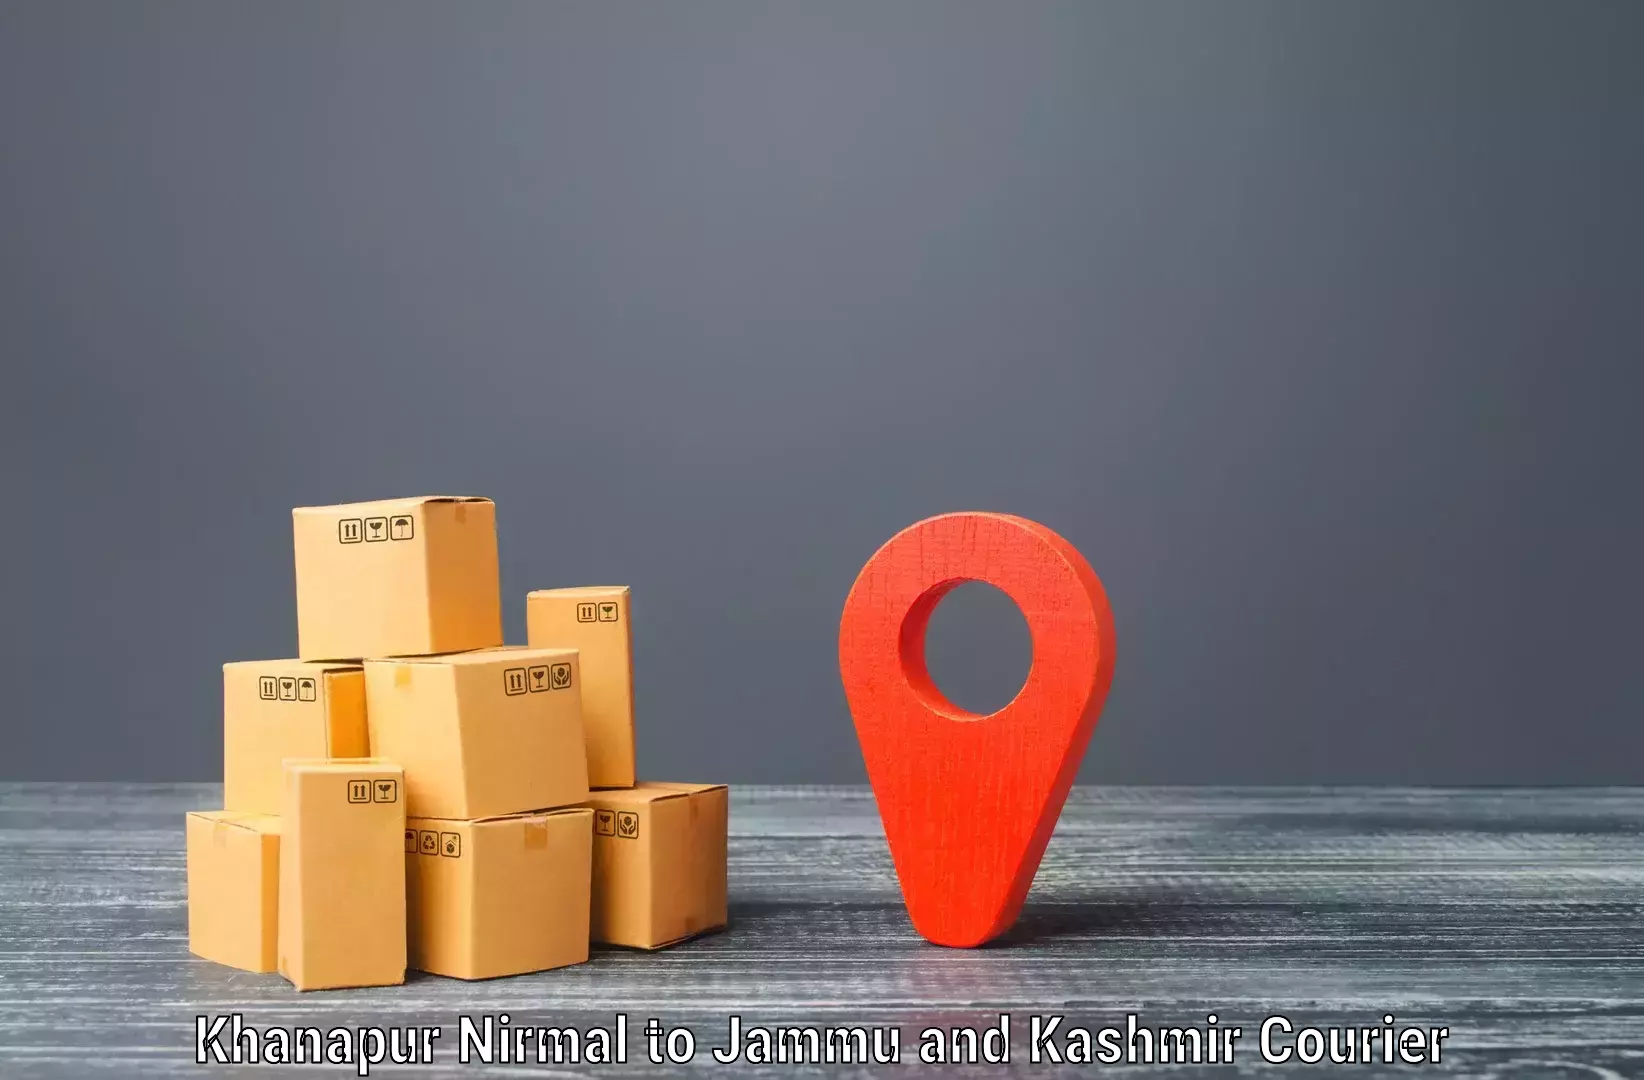 International courier networks Khanapur Nirmal to Nagrota